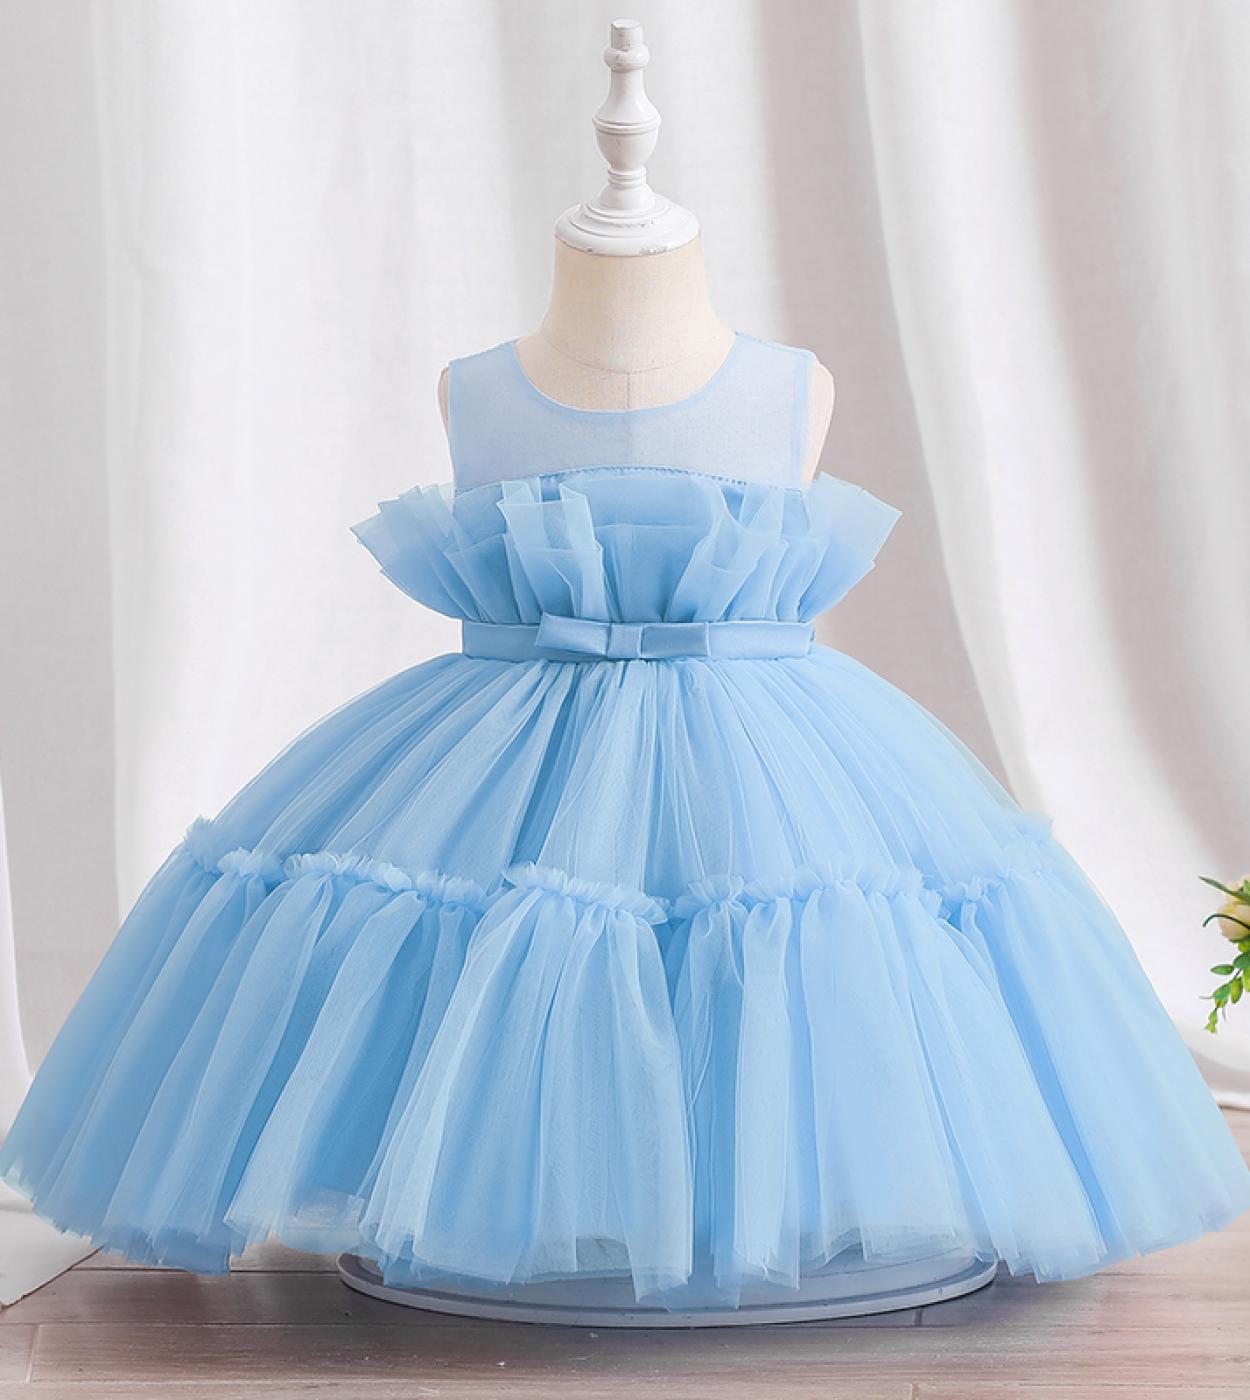 Vestido de niña linda princesa vestido de tutú de noche 12m 24m vestidos de fiesta de boda infantil azul niños niñas niños ropa 